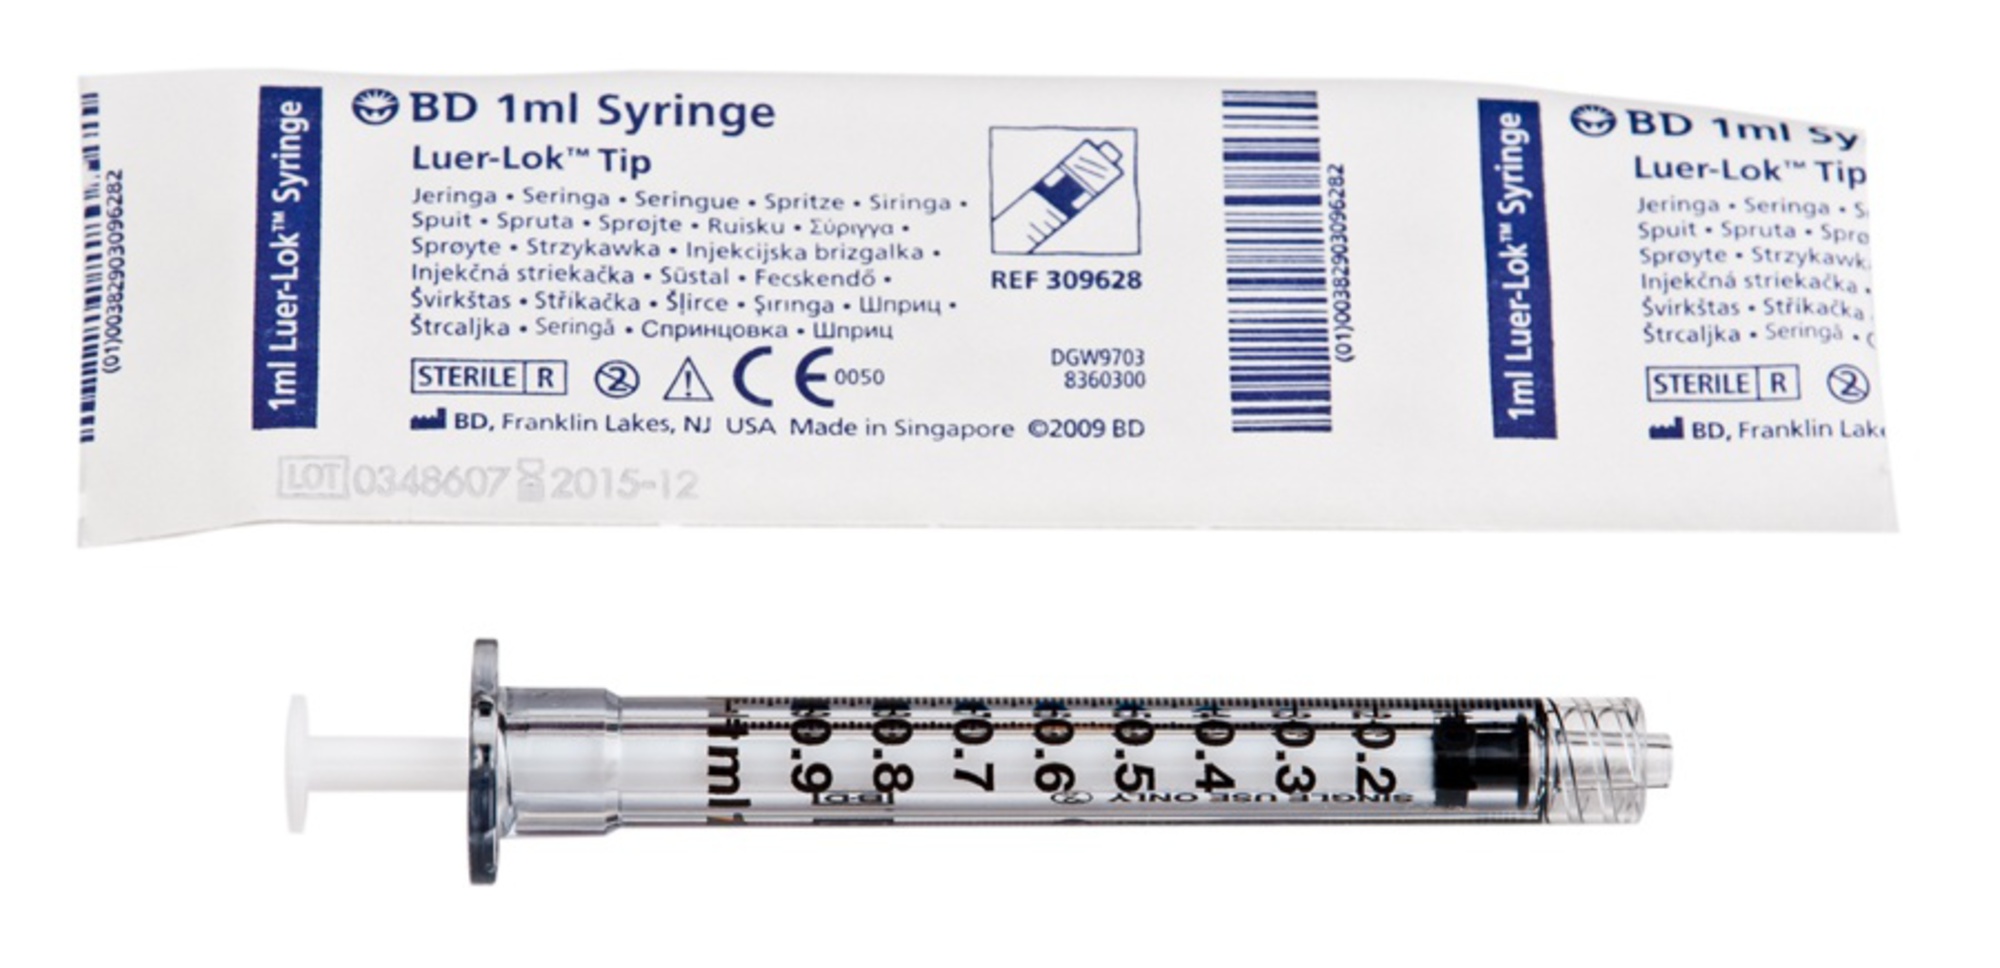 3-piece syringes BD SYRINGE 1ml Luer-Lok Tip (Luer-Lock) 309628 (100 pcs)